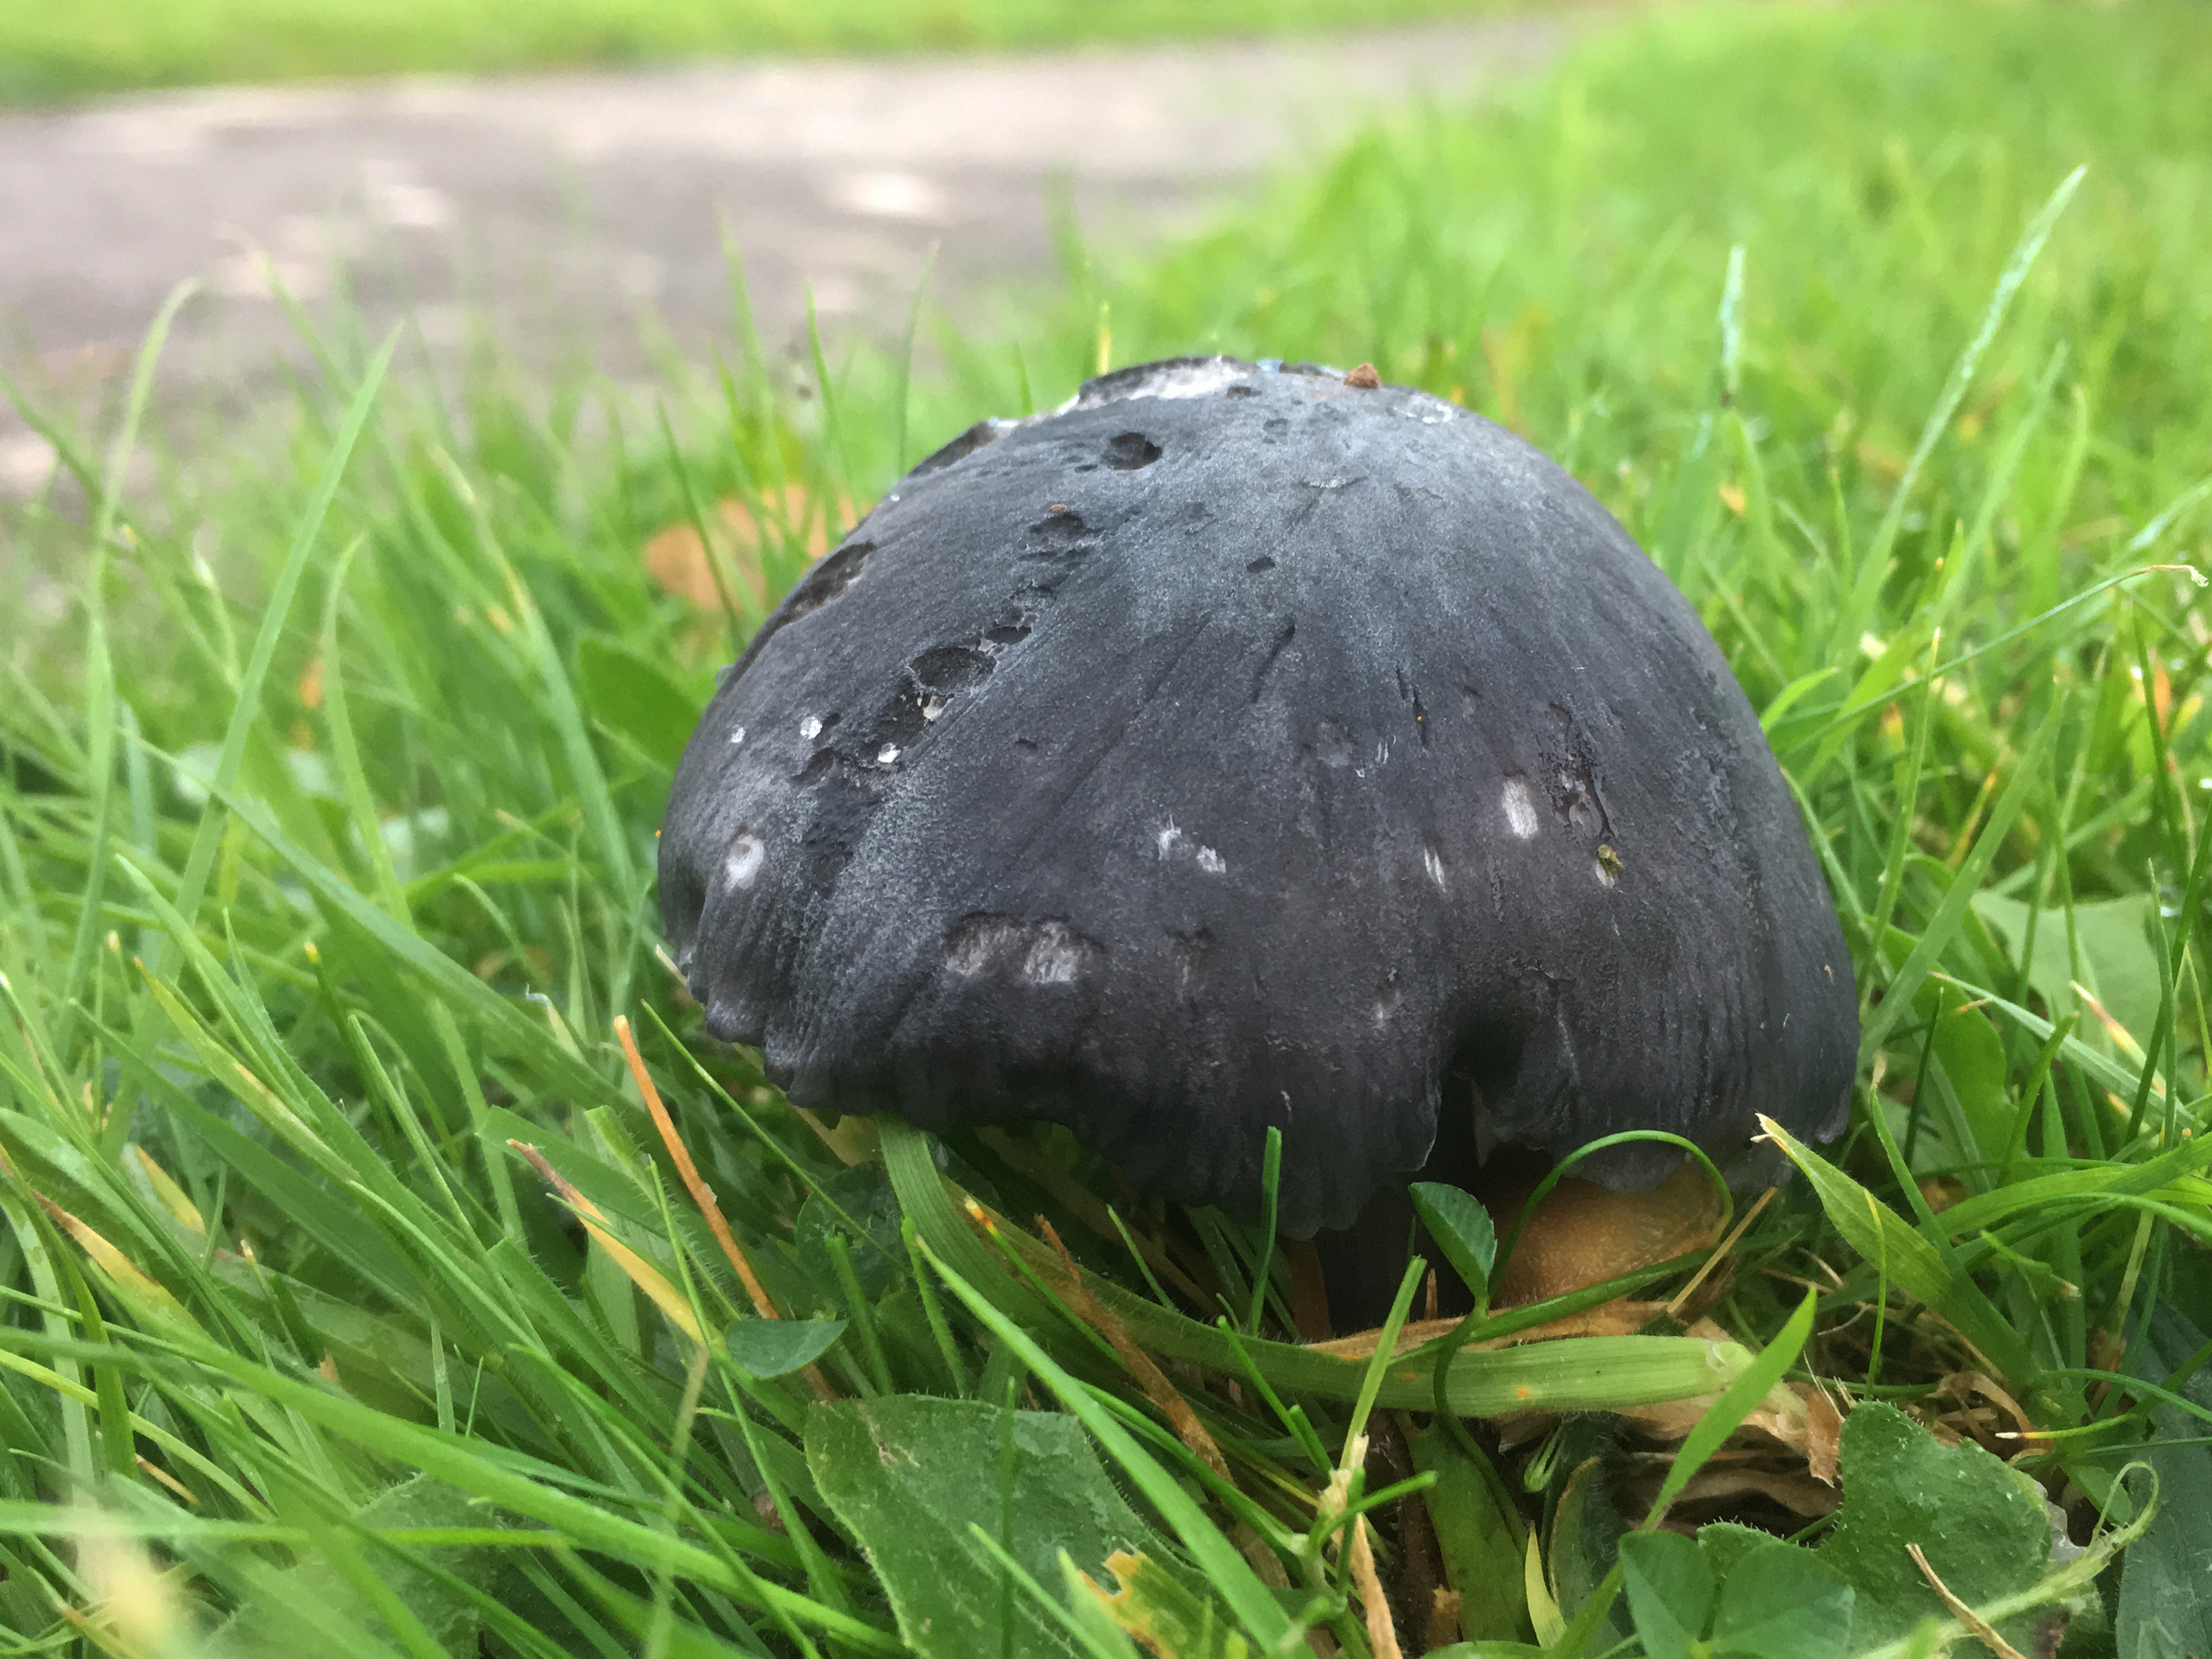 Blue-grey fungus on grass.